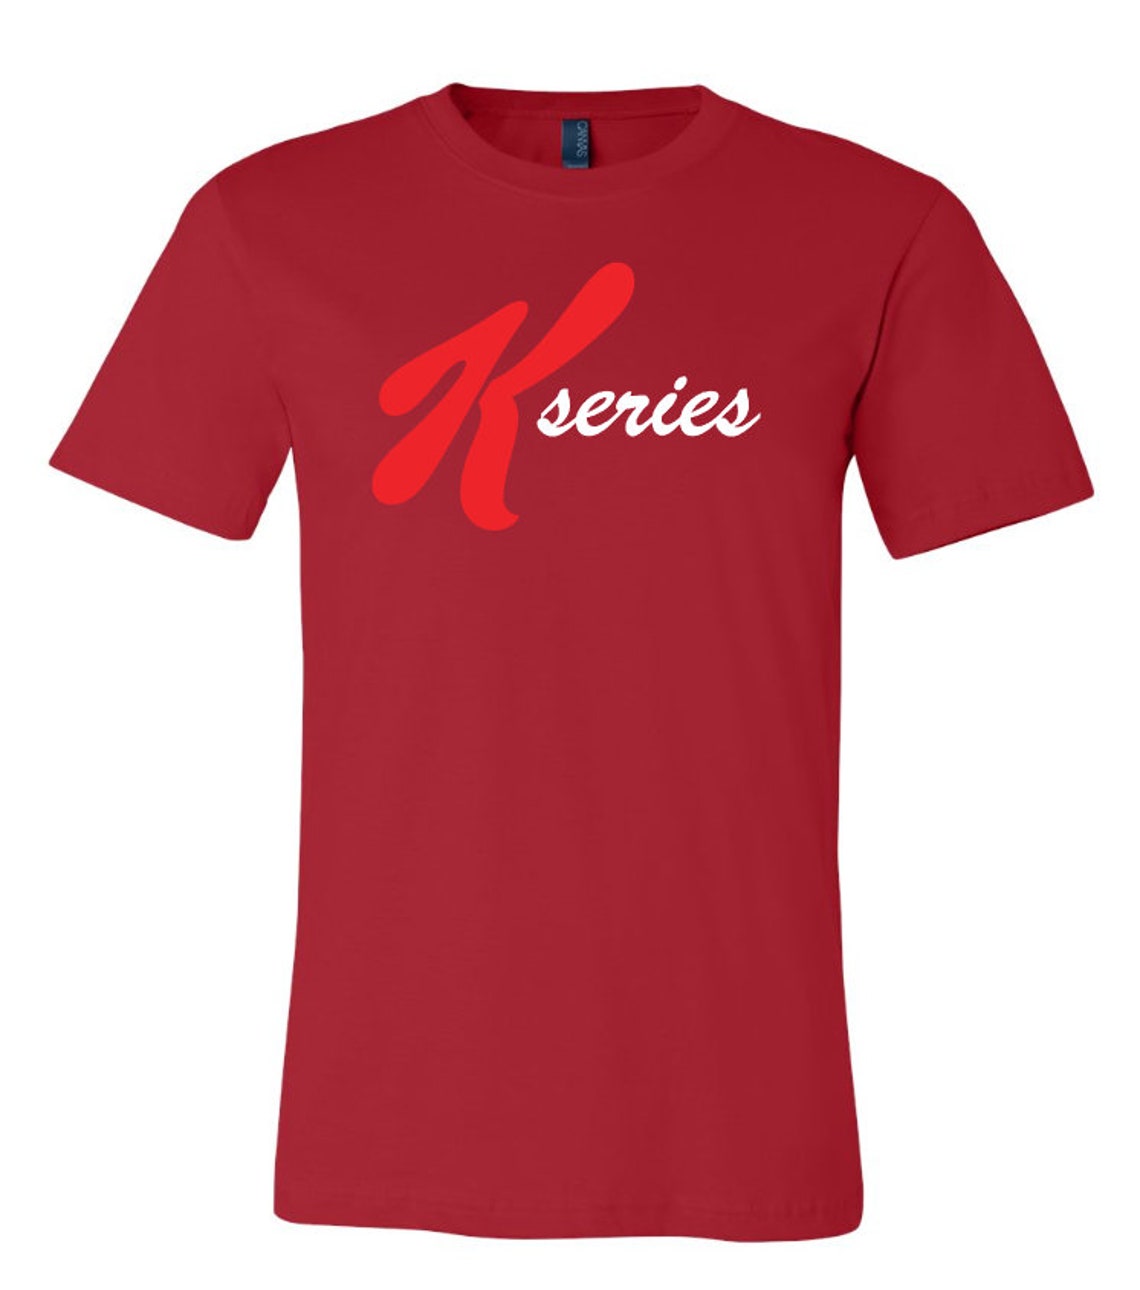 K Series T-shirt | Etsy